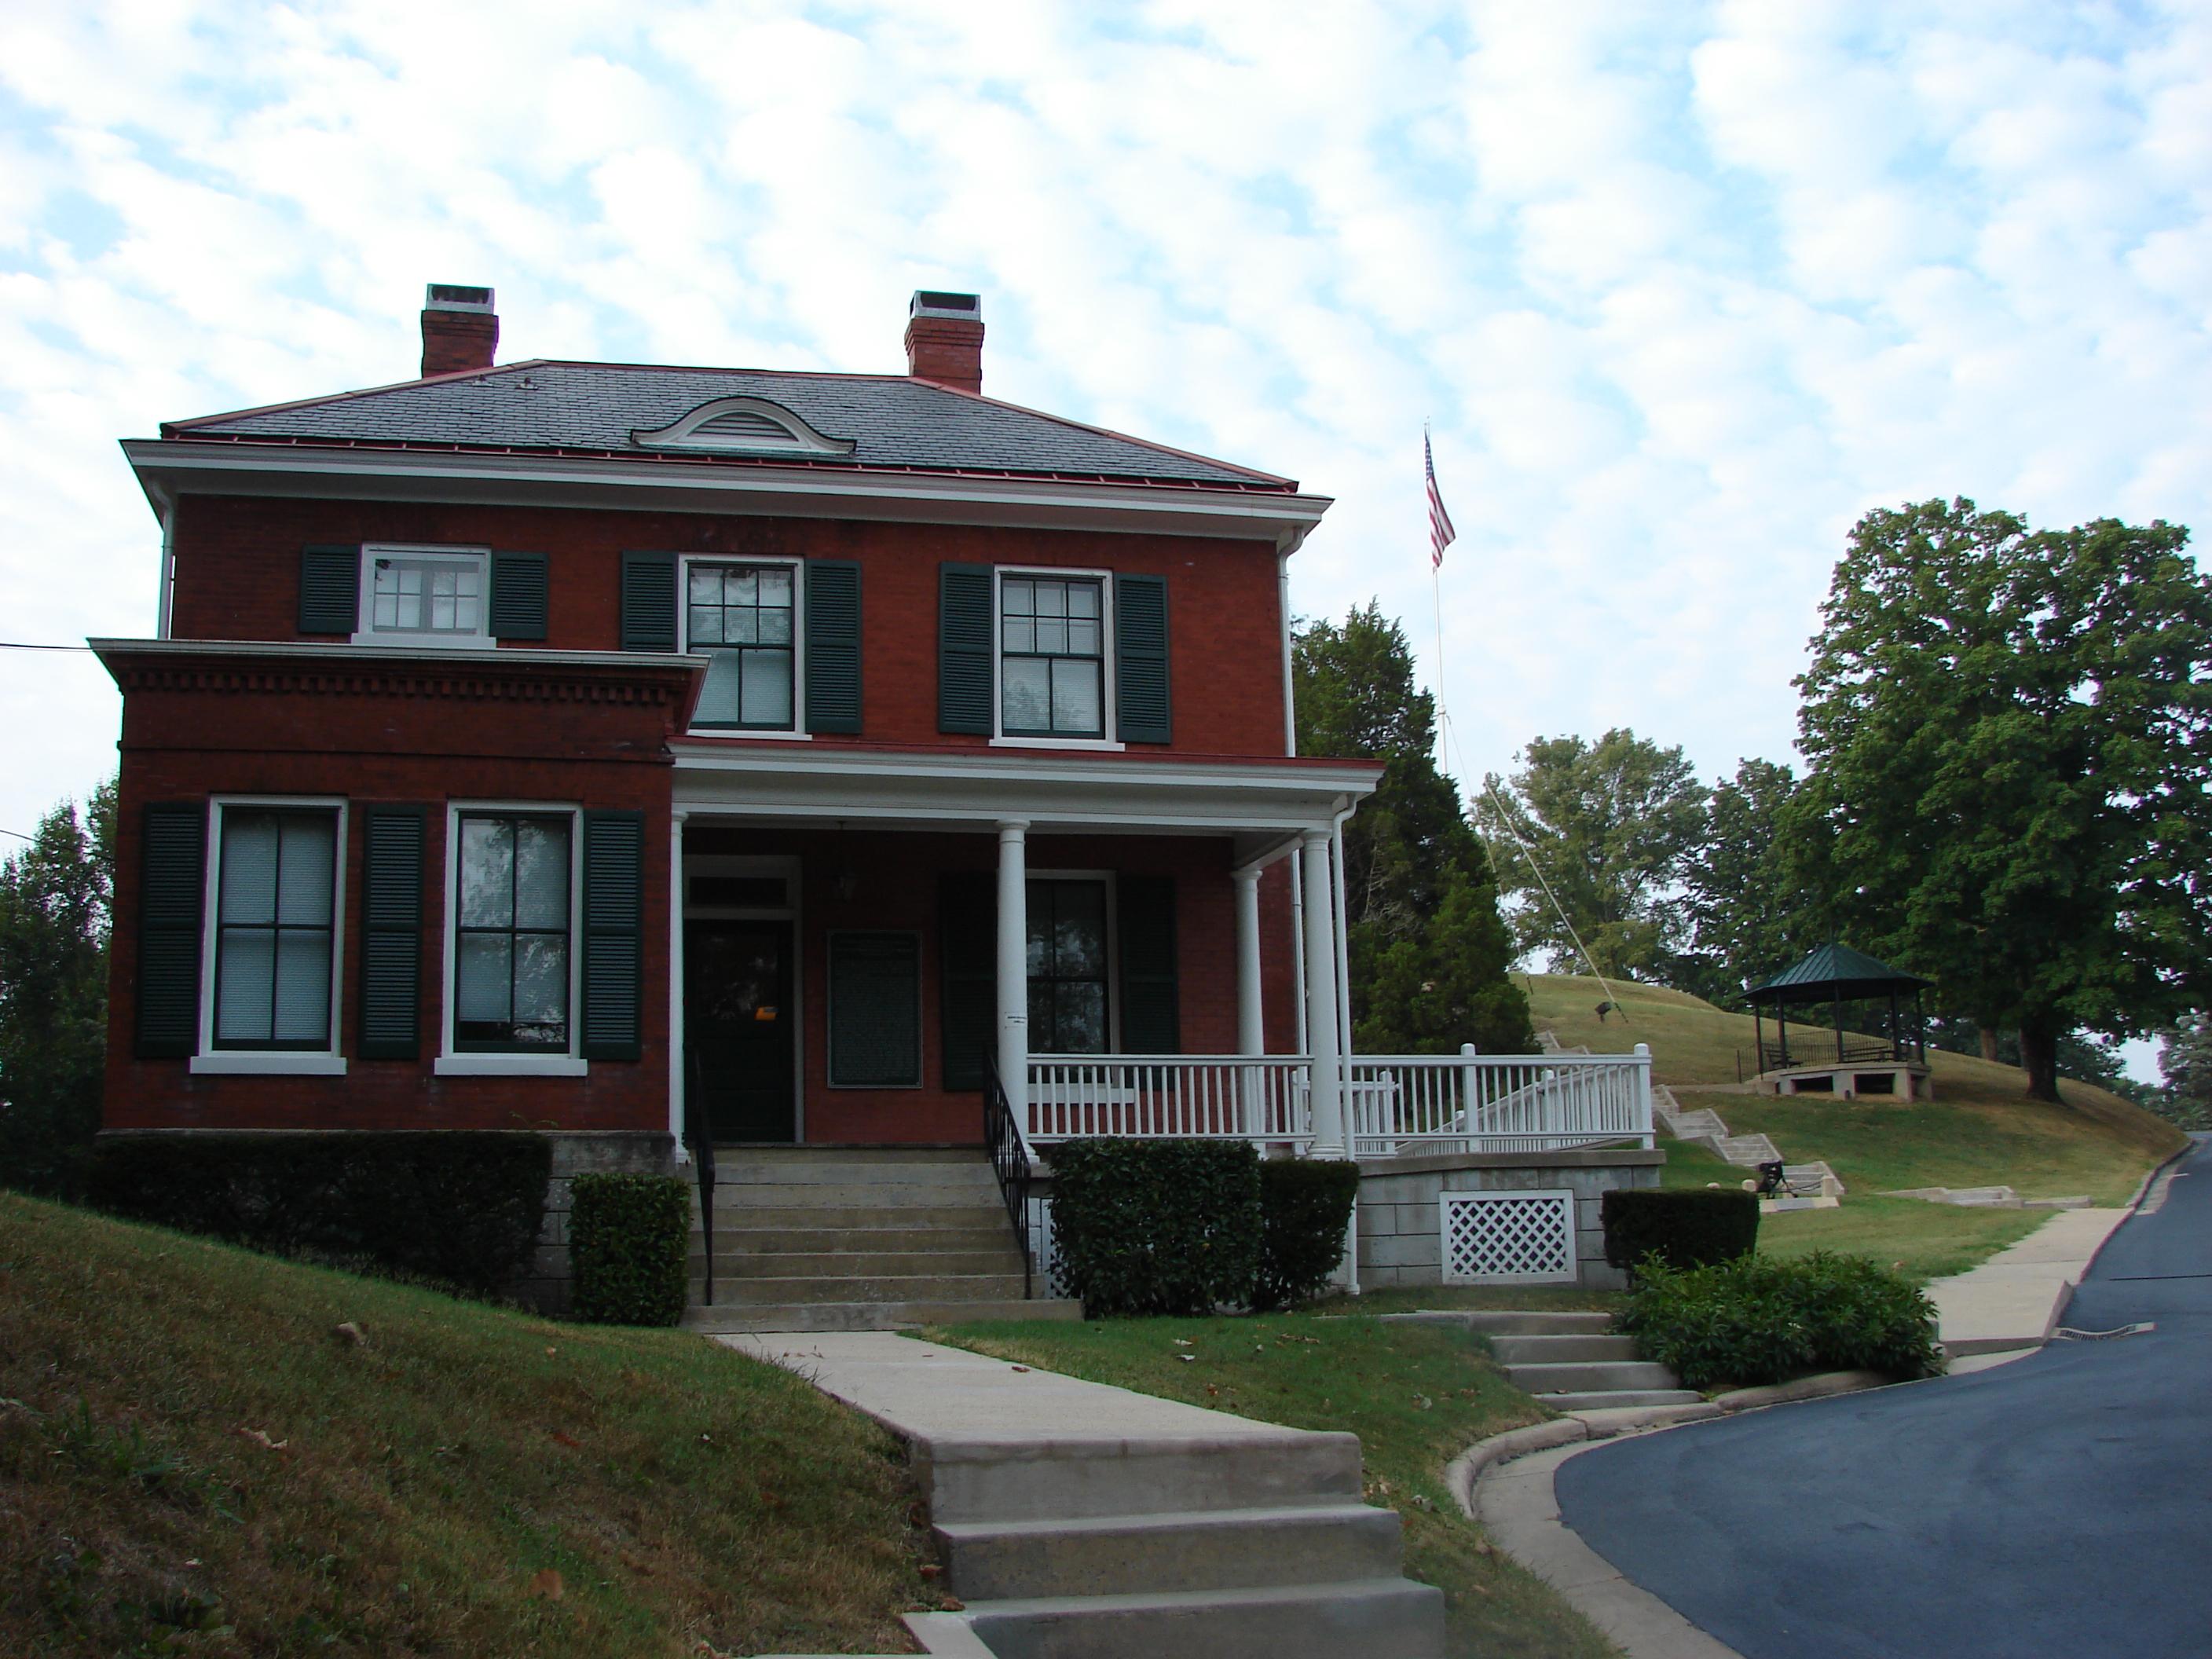 The Lodge - Park Headquarters